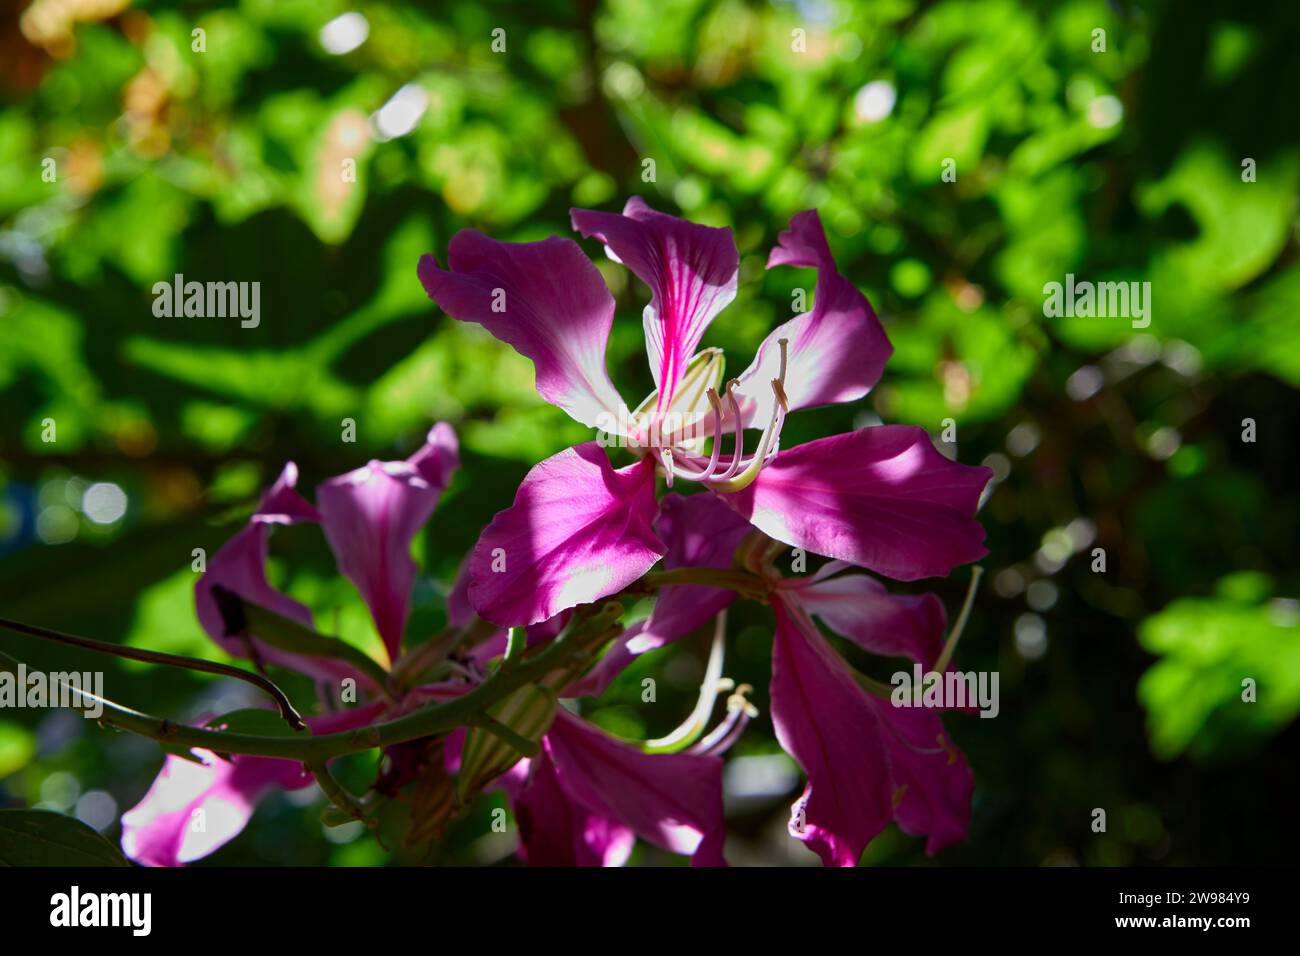 Close-up view of purple Bauhinia x blakeana flower in bloom Stock Photo